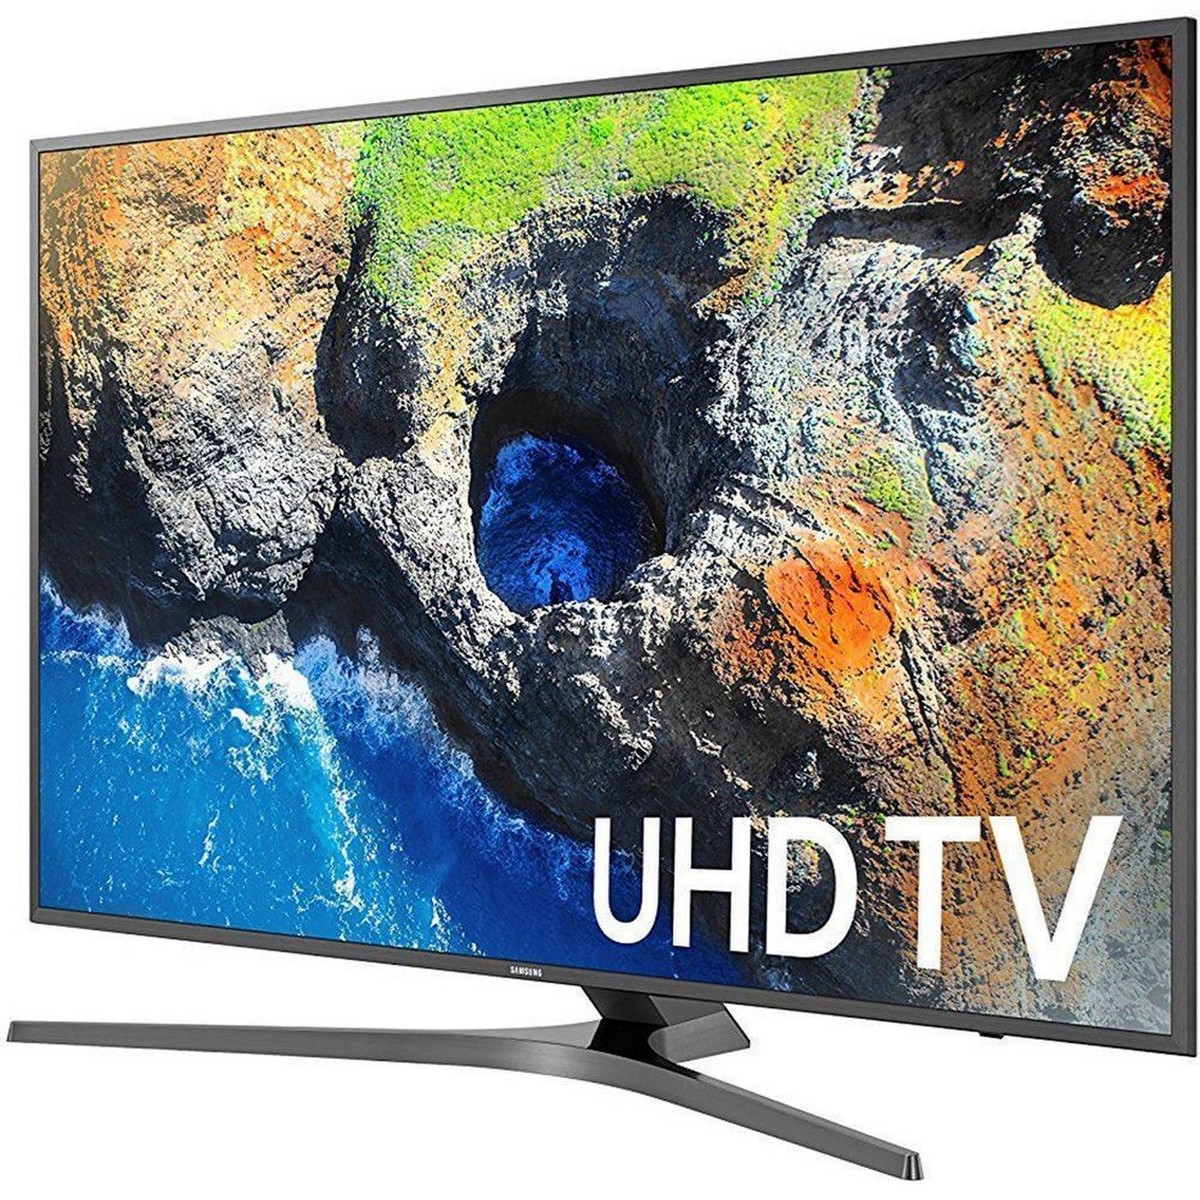 Samsung Ultra HD Smart LED TV 55MU7000 55inch